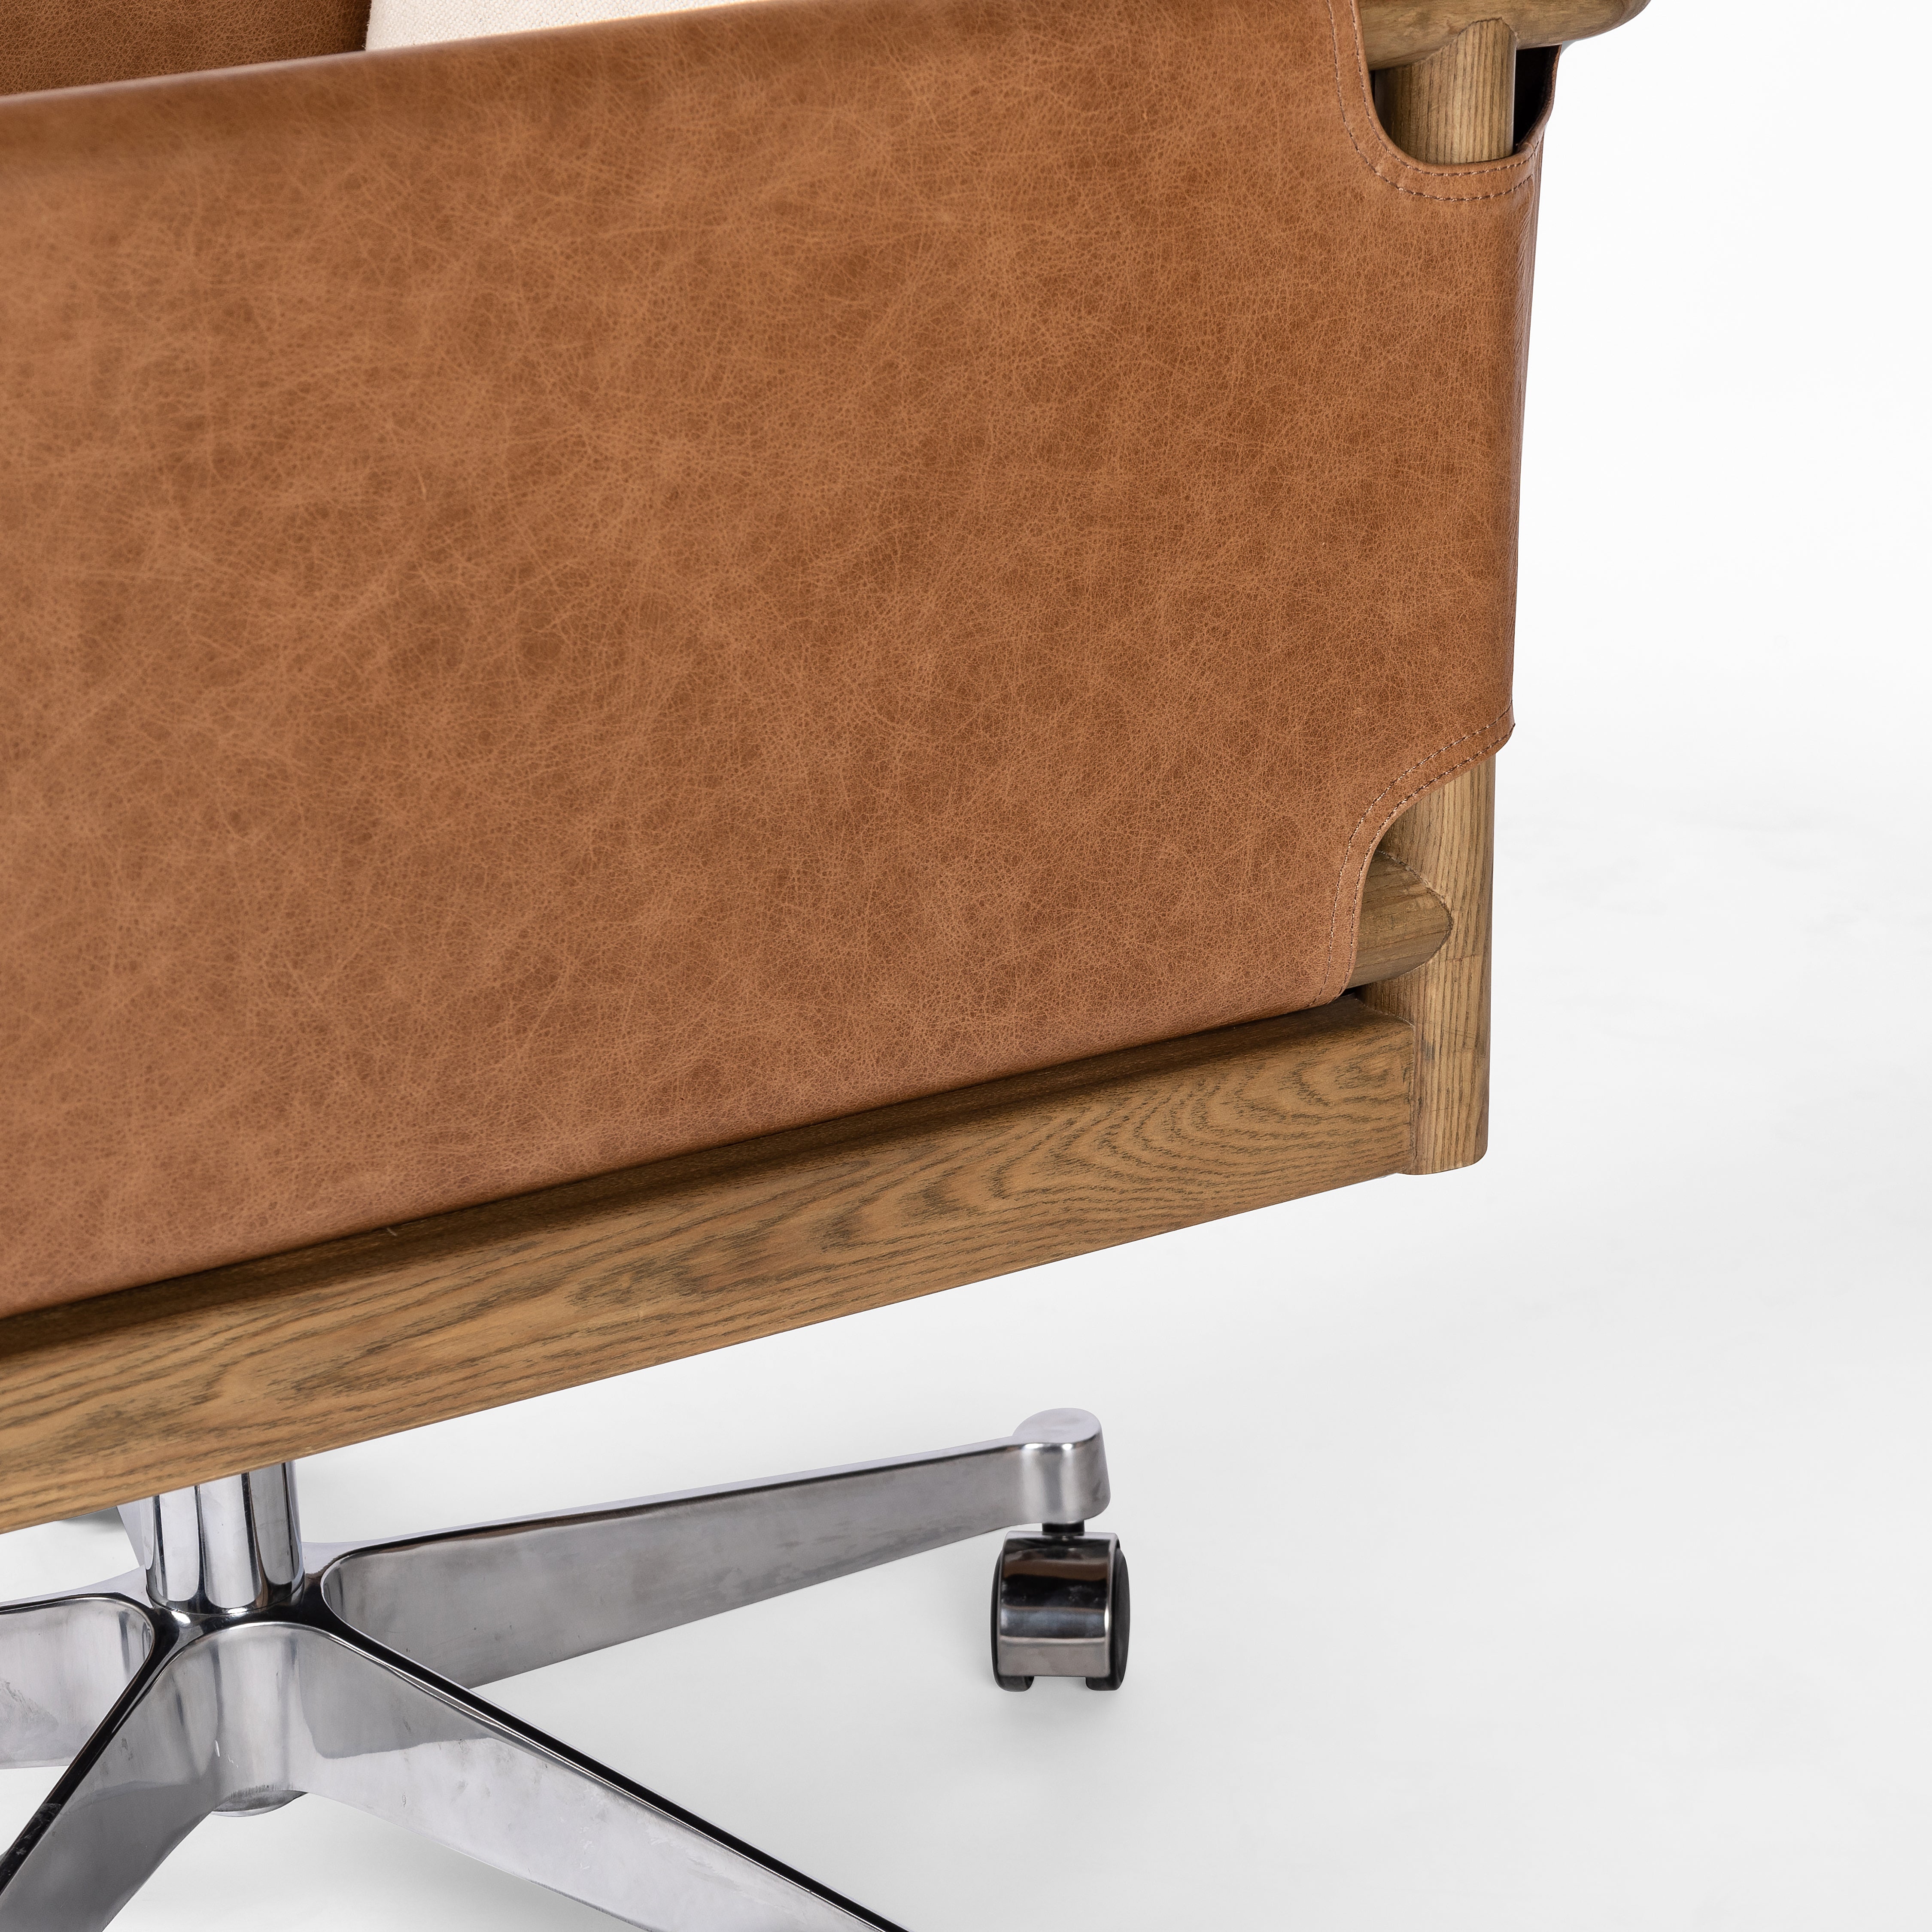 Navarro Desk Chair-Bergamo Parchment - StyleMeGHD - 